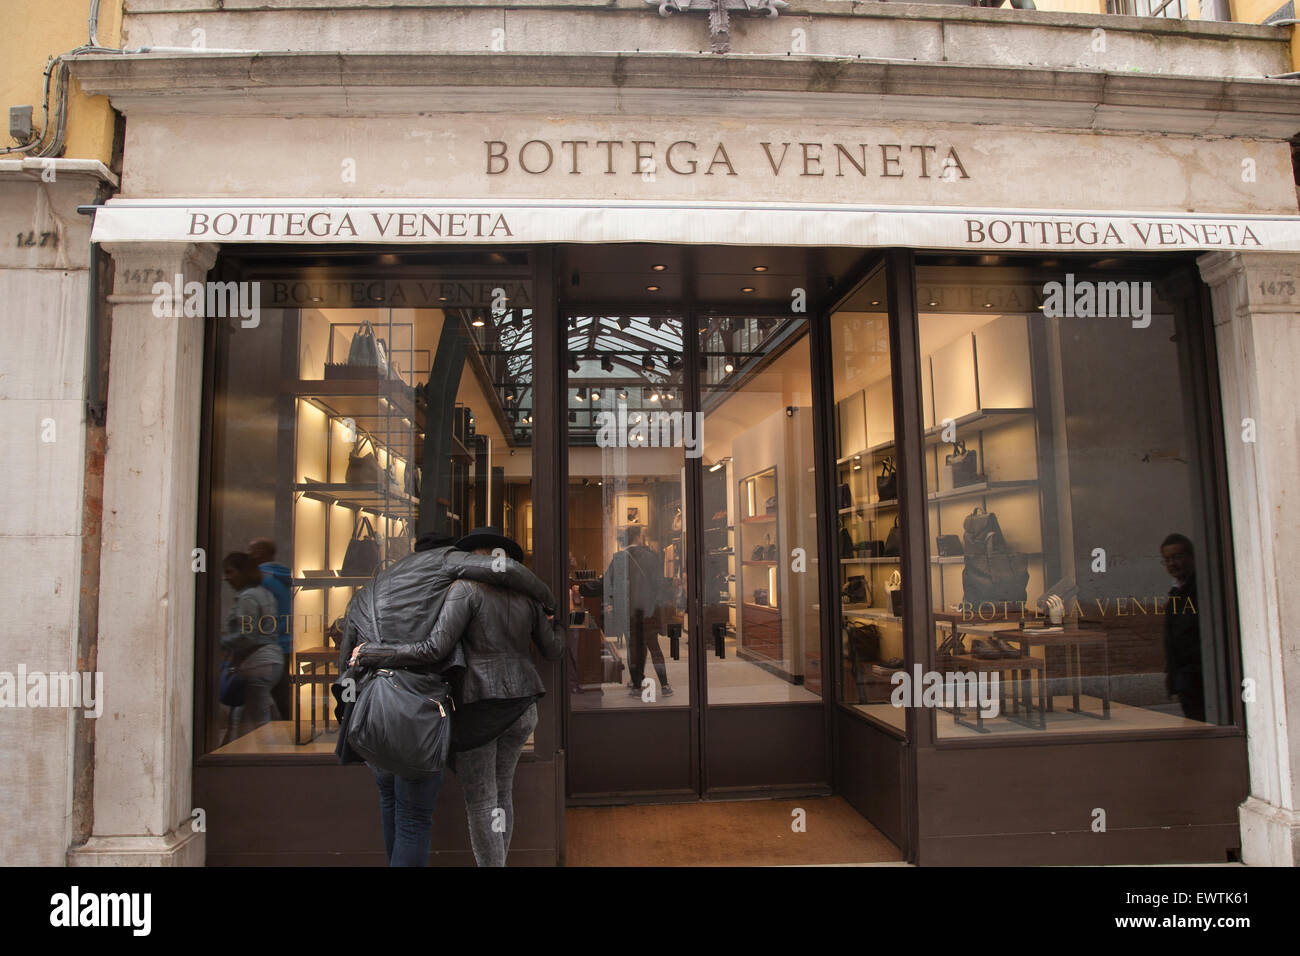 Bottega Veneta Shop Window and Facade, Venice; Italy Stock Photo - Alamy